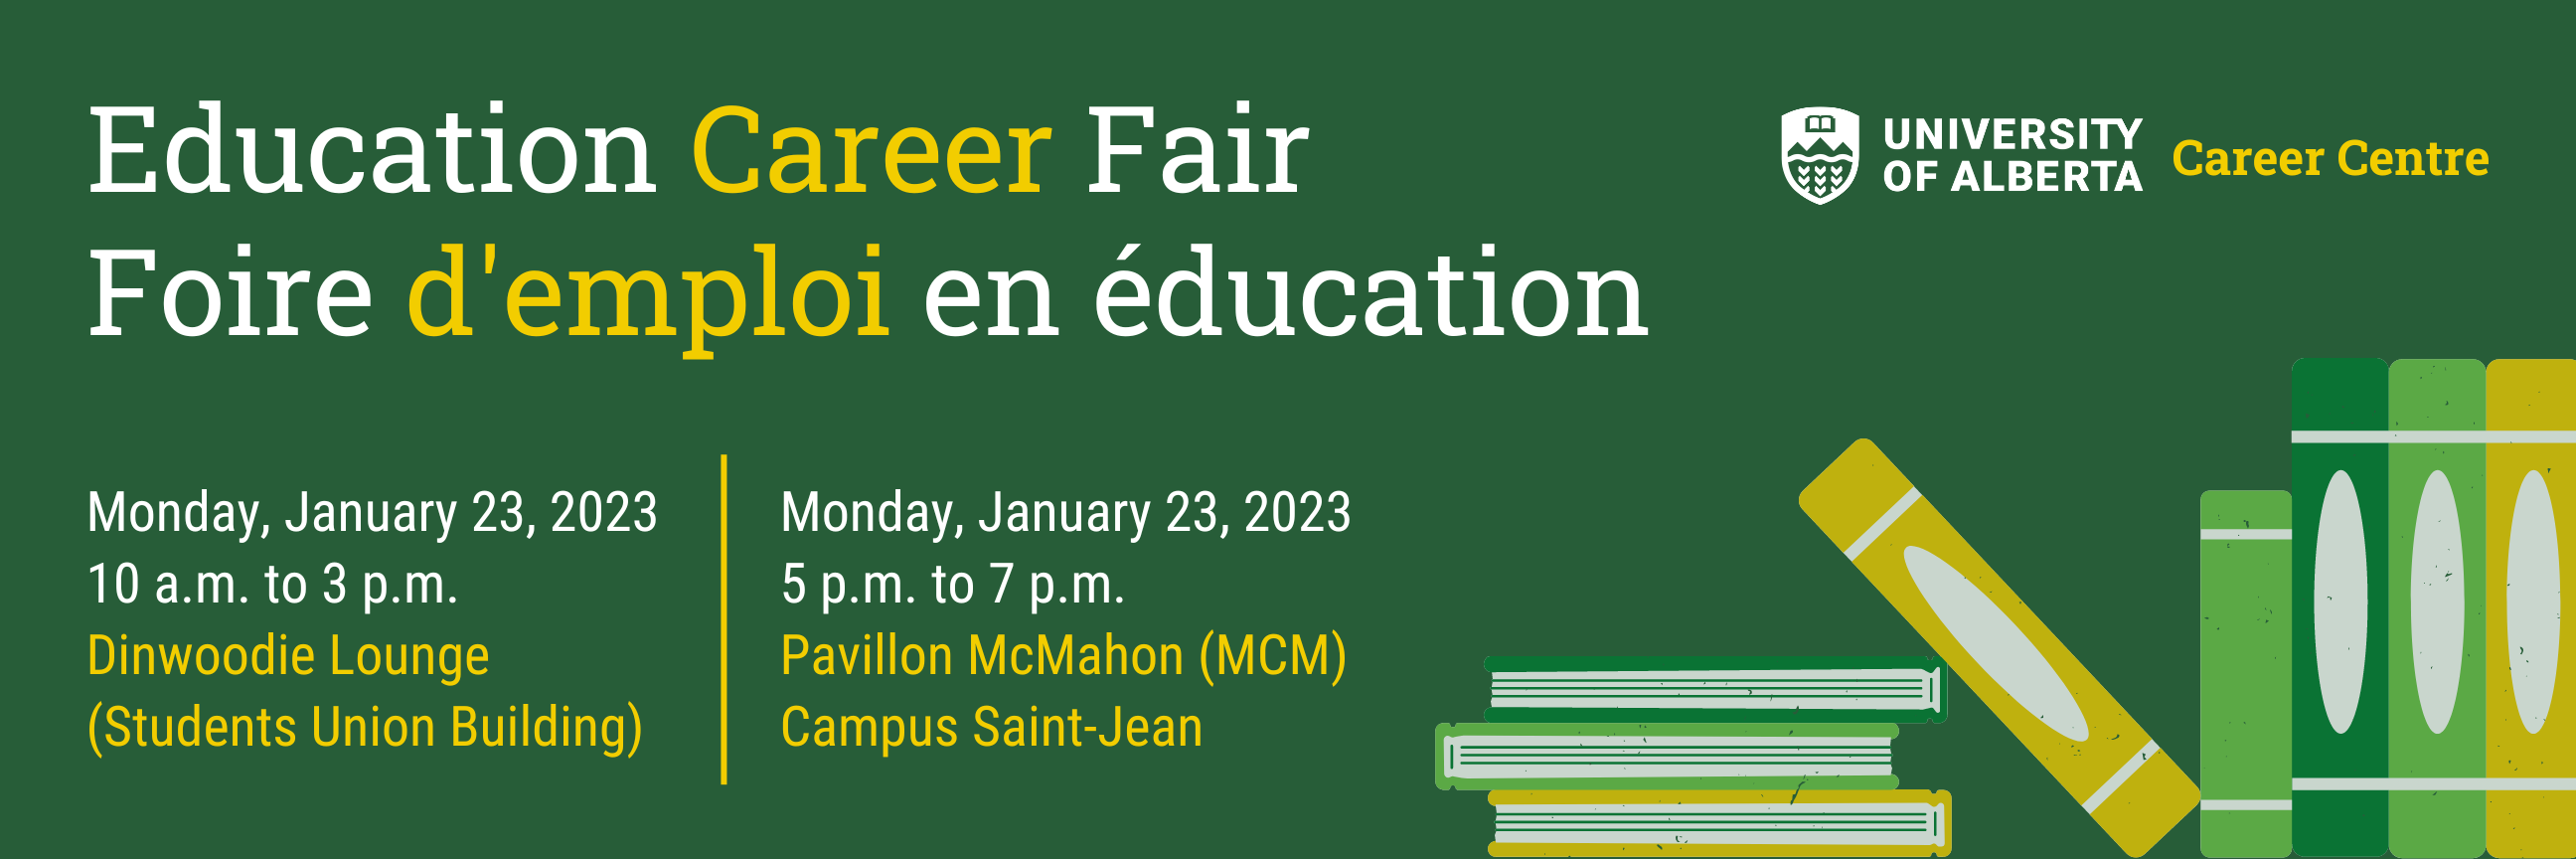 education-career-fair-web-banner3.png